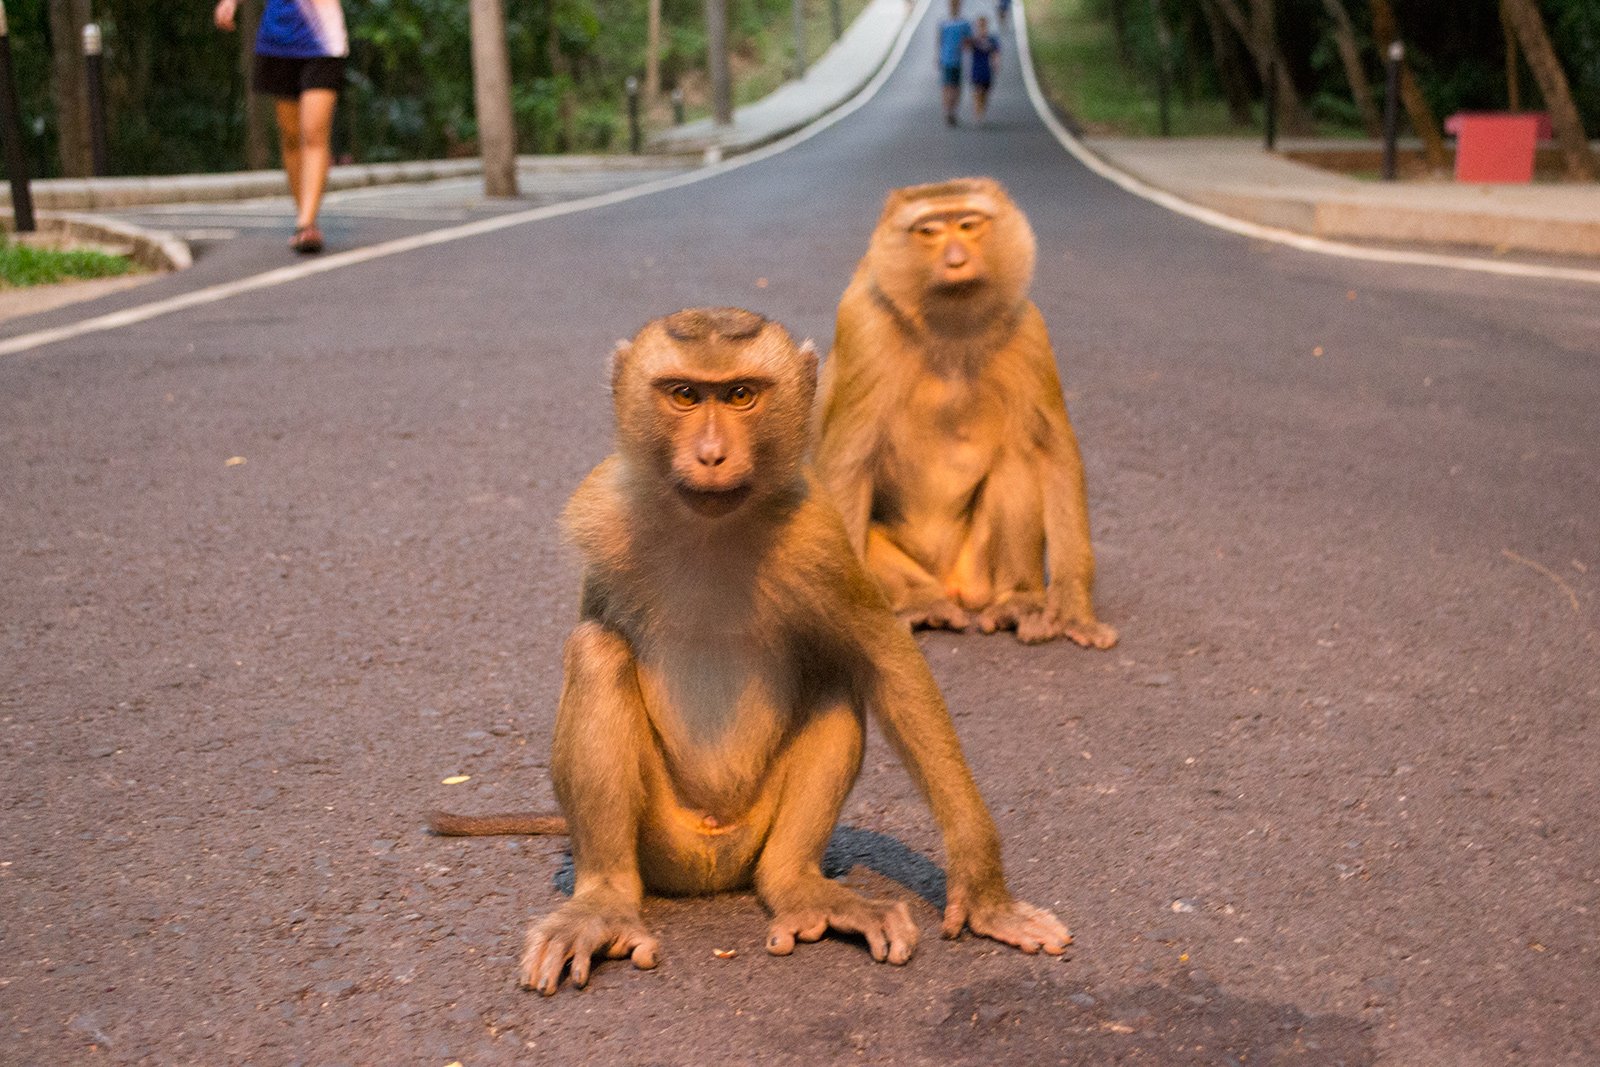 How to feed wild monkeys in Phuket